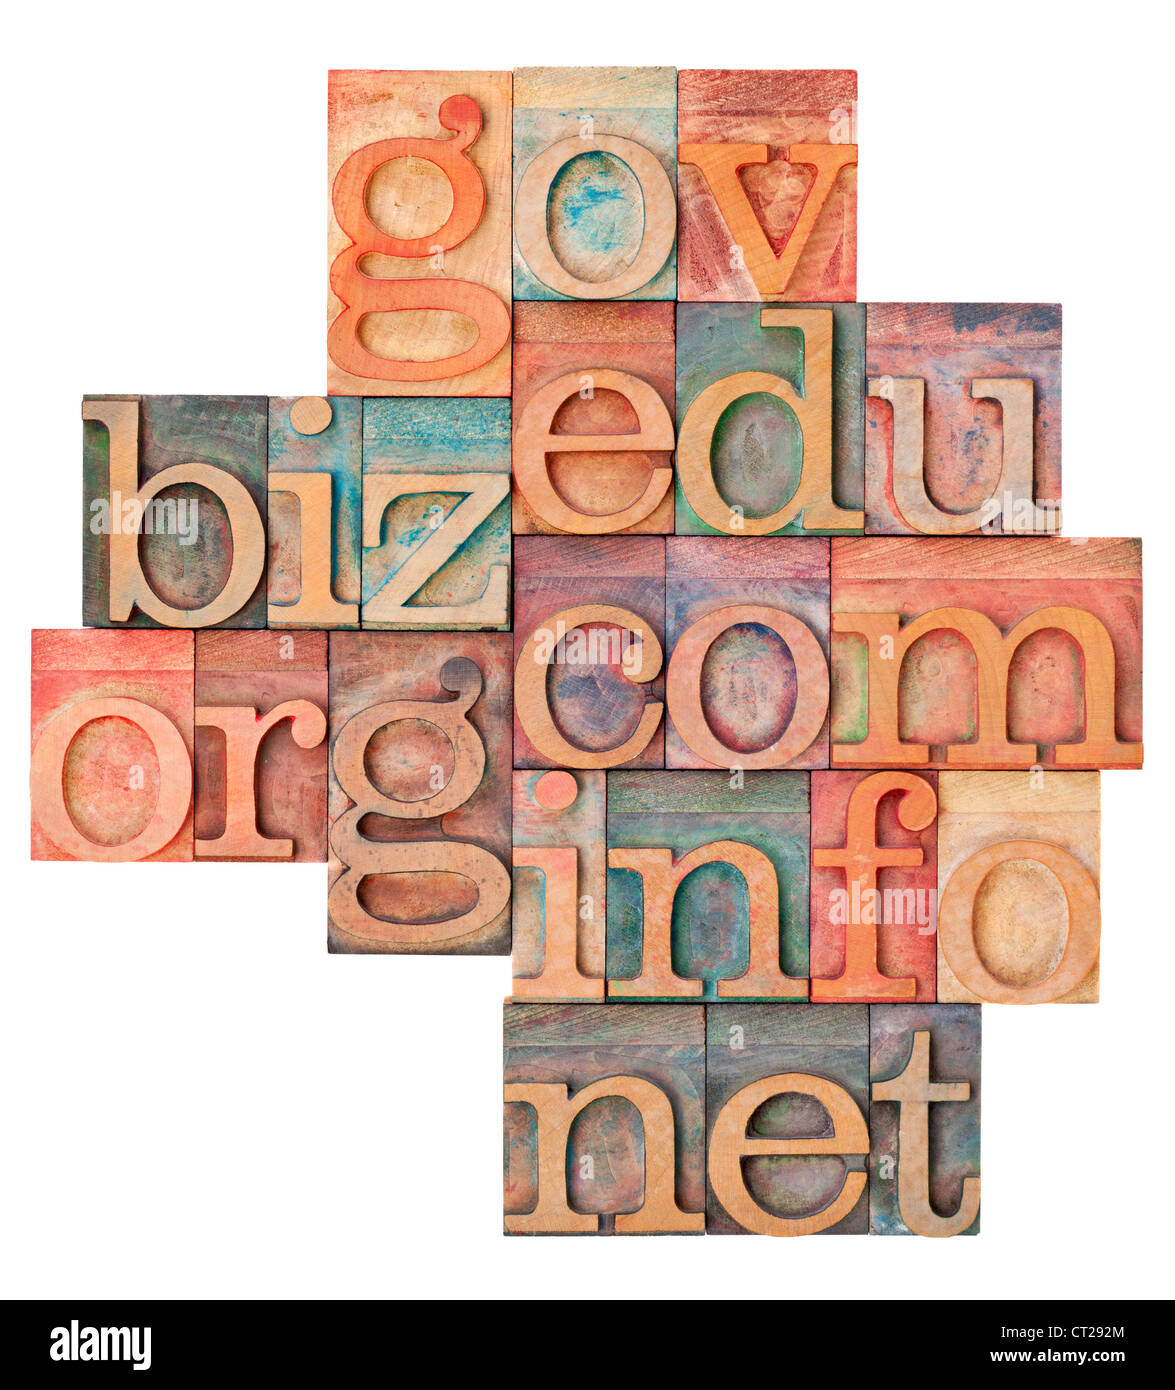 collage of popular internet domain extensions (org, biz, gov, net, info, edu, com) - vintage letterpress wood type Stock Photo